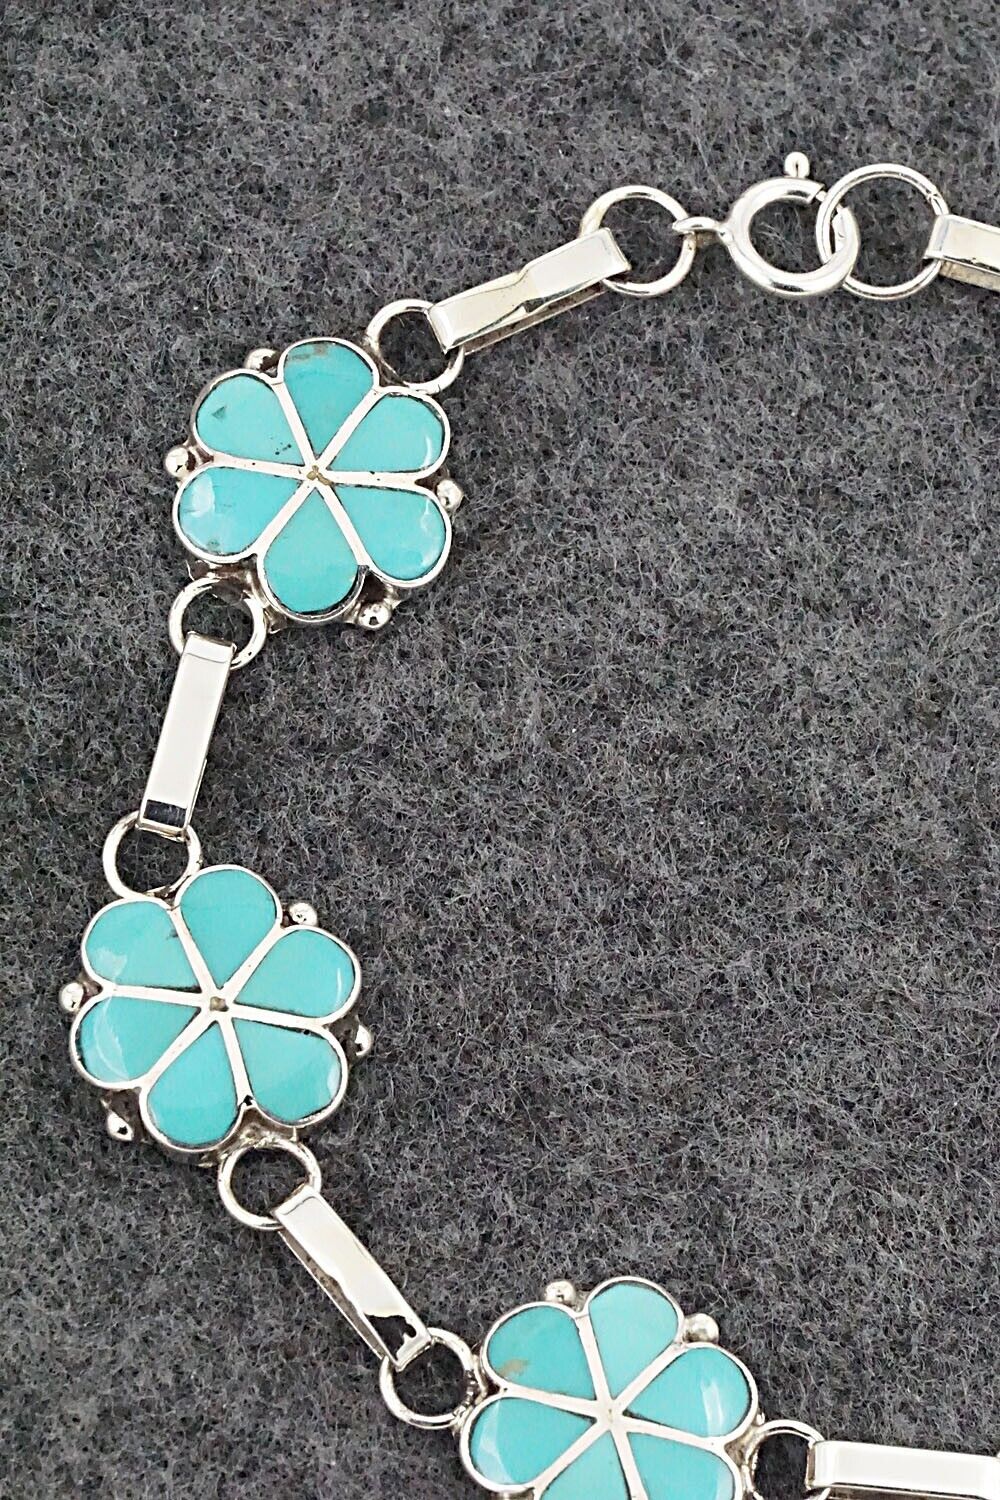 Turquoise & Sterling Silver Link Bracelet - Gina Dosedo